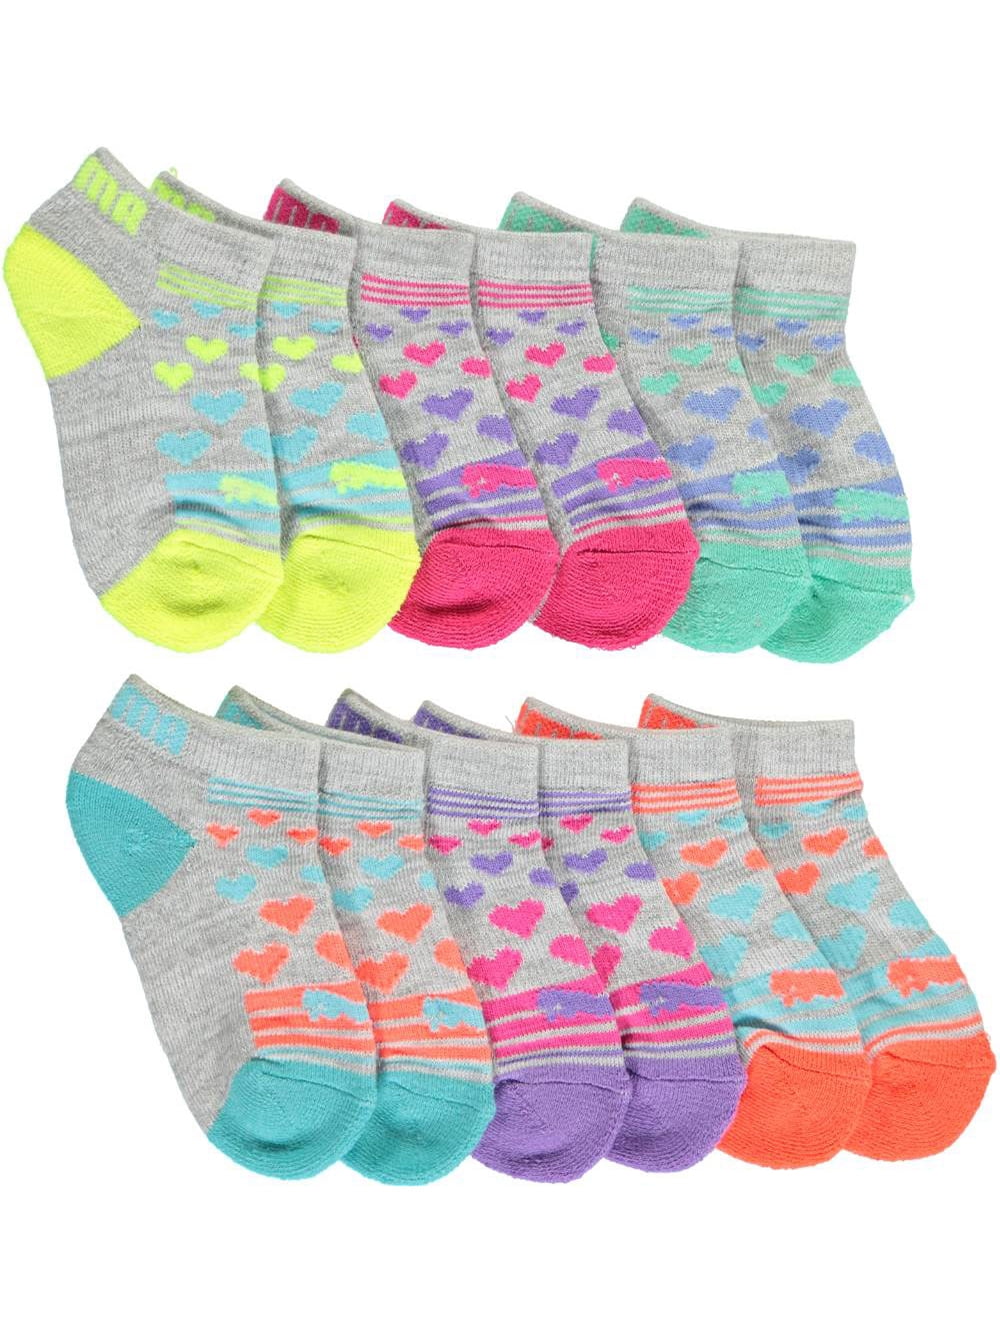 Puma Girls' Sprinkled Hearts 6-Pack Low Cut Socks - gray/pink, 5